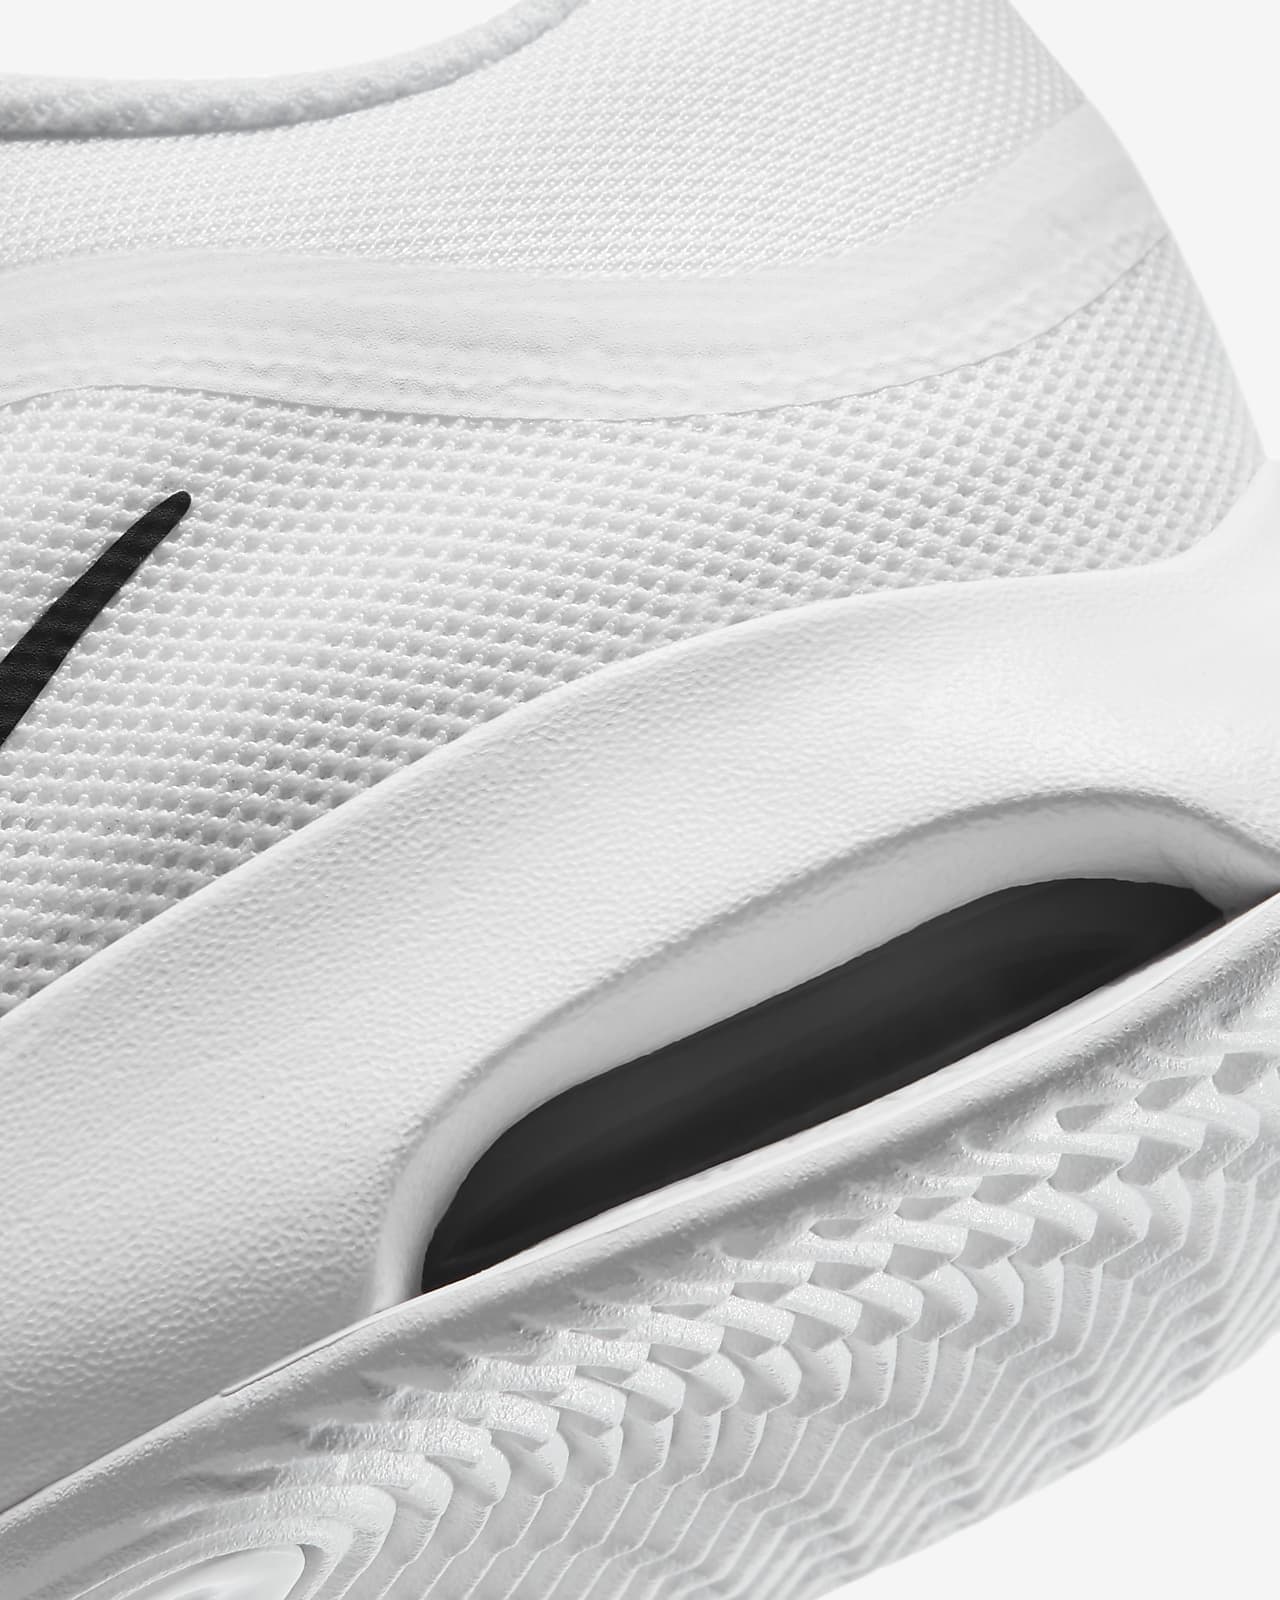 Hard Court Tennis Shoe. Nike BG